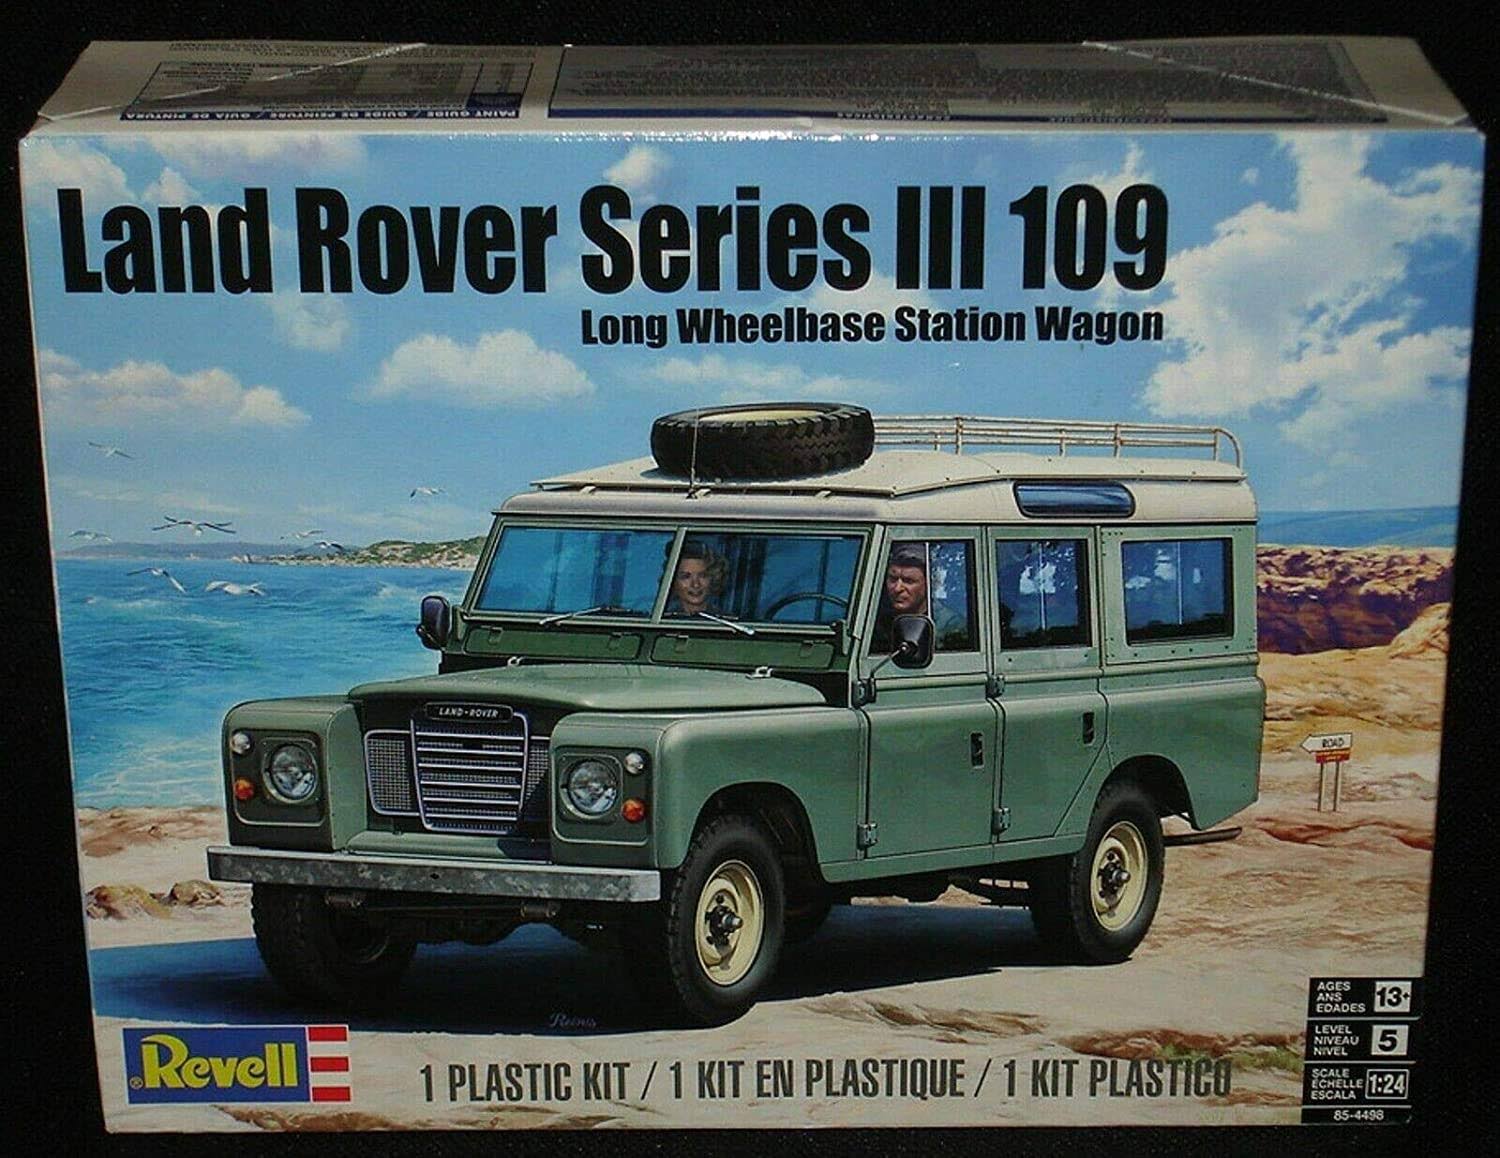 Revell Land Rover Series III 109 Station Waggon Plastic Model Kit 1:24-85-4498